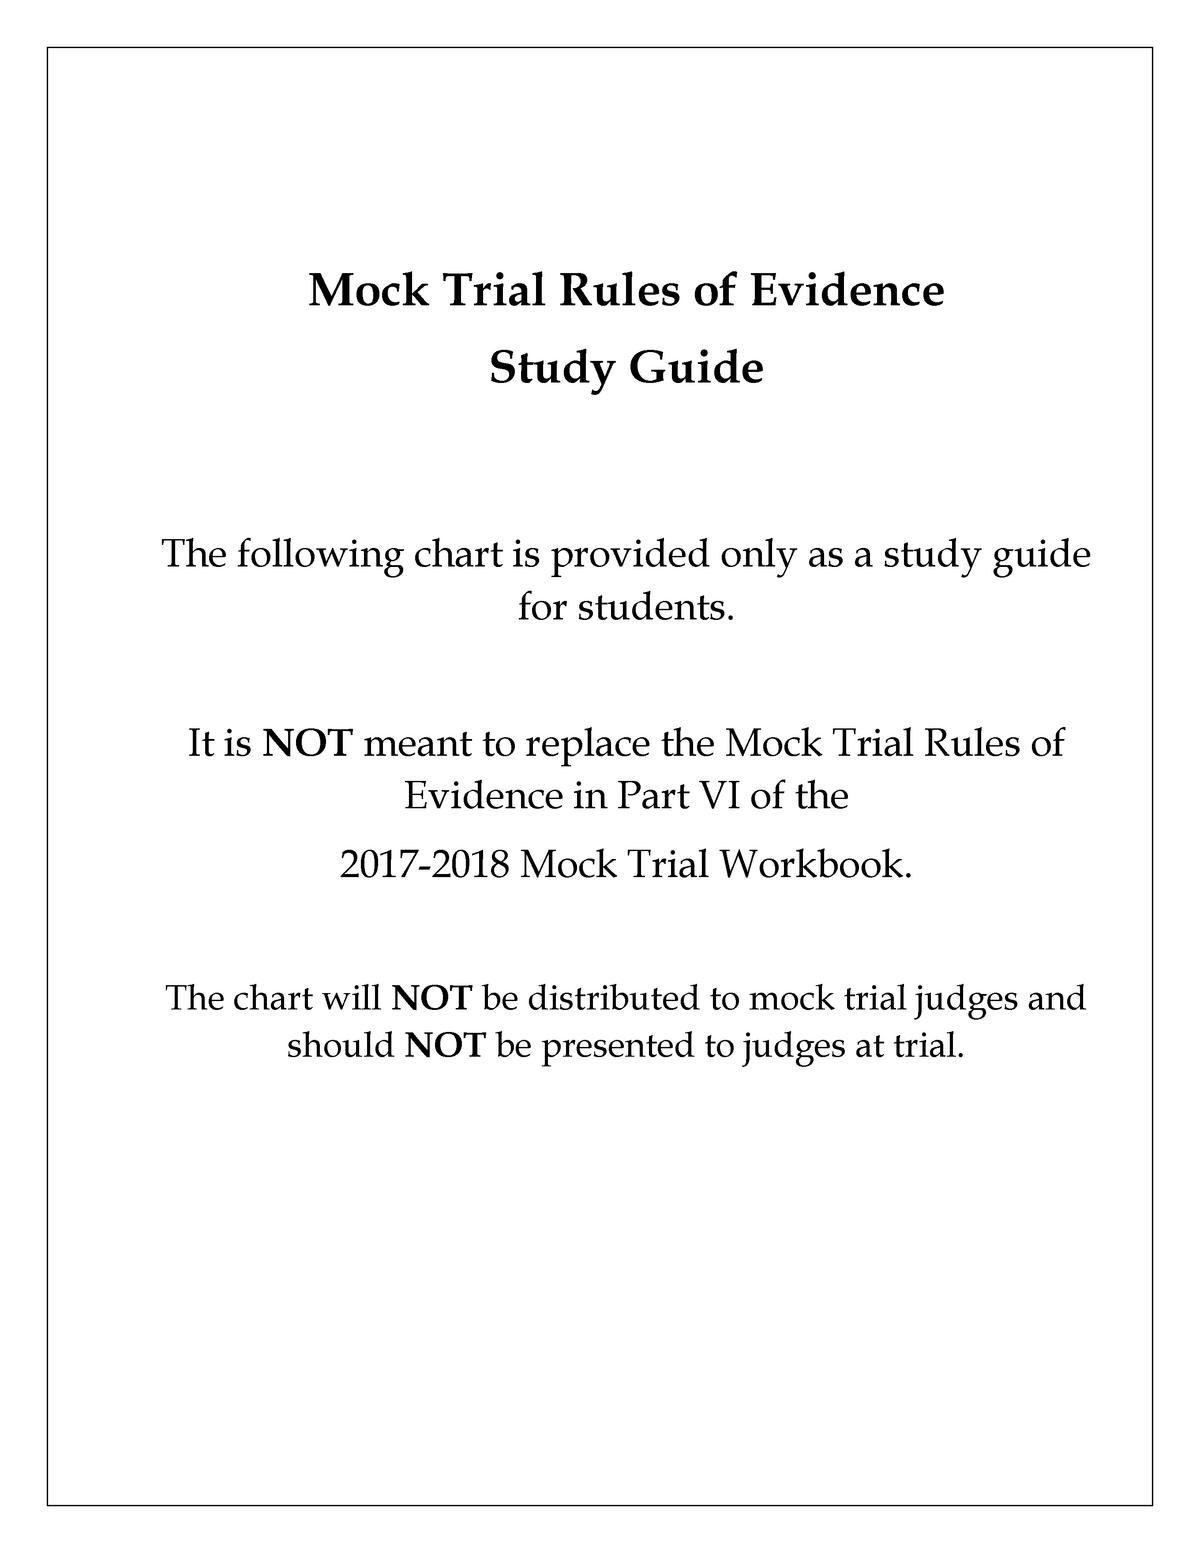 Copy of RulesofEvidenceStudyGuide REV Mock Trial Rules of